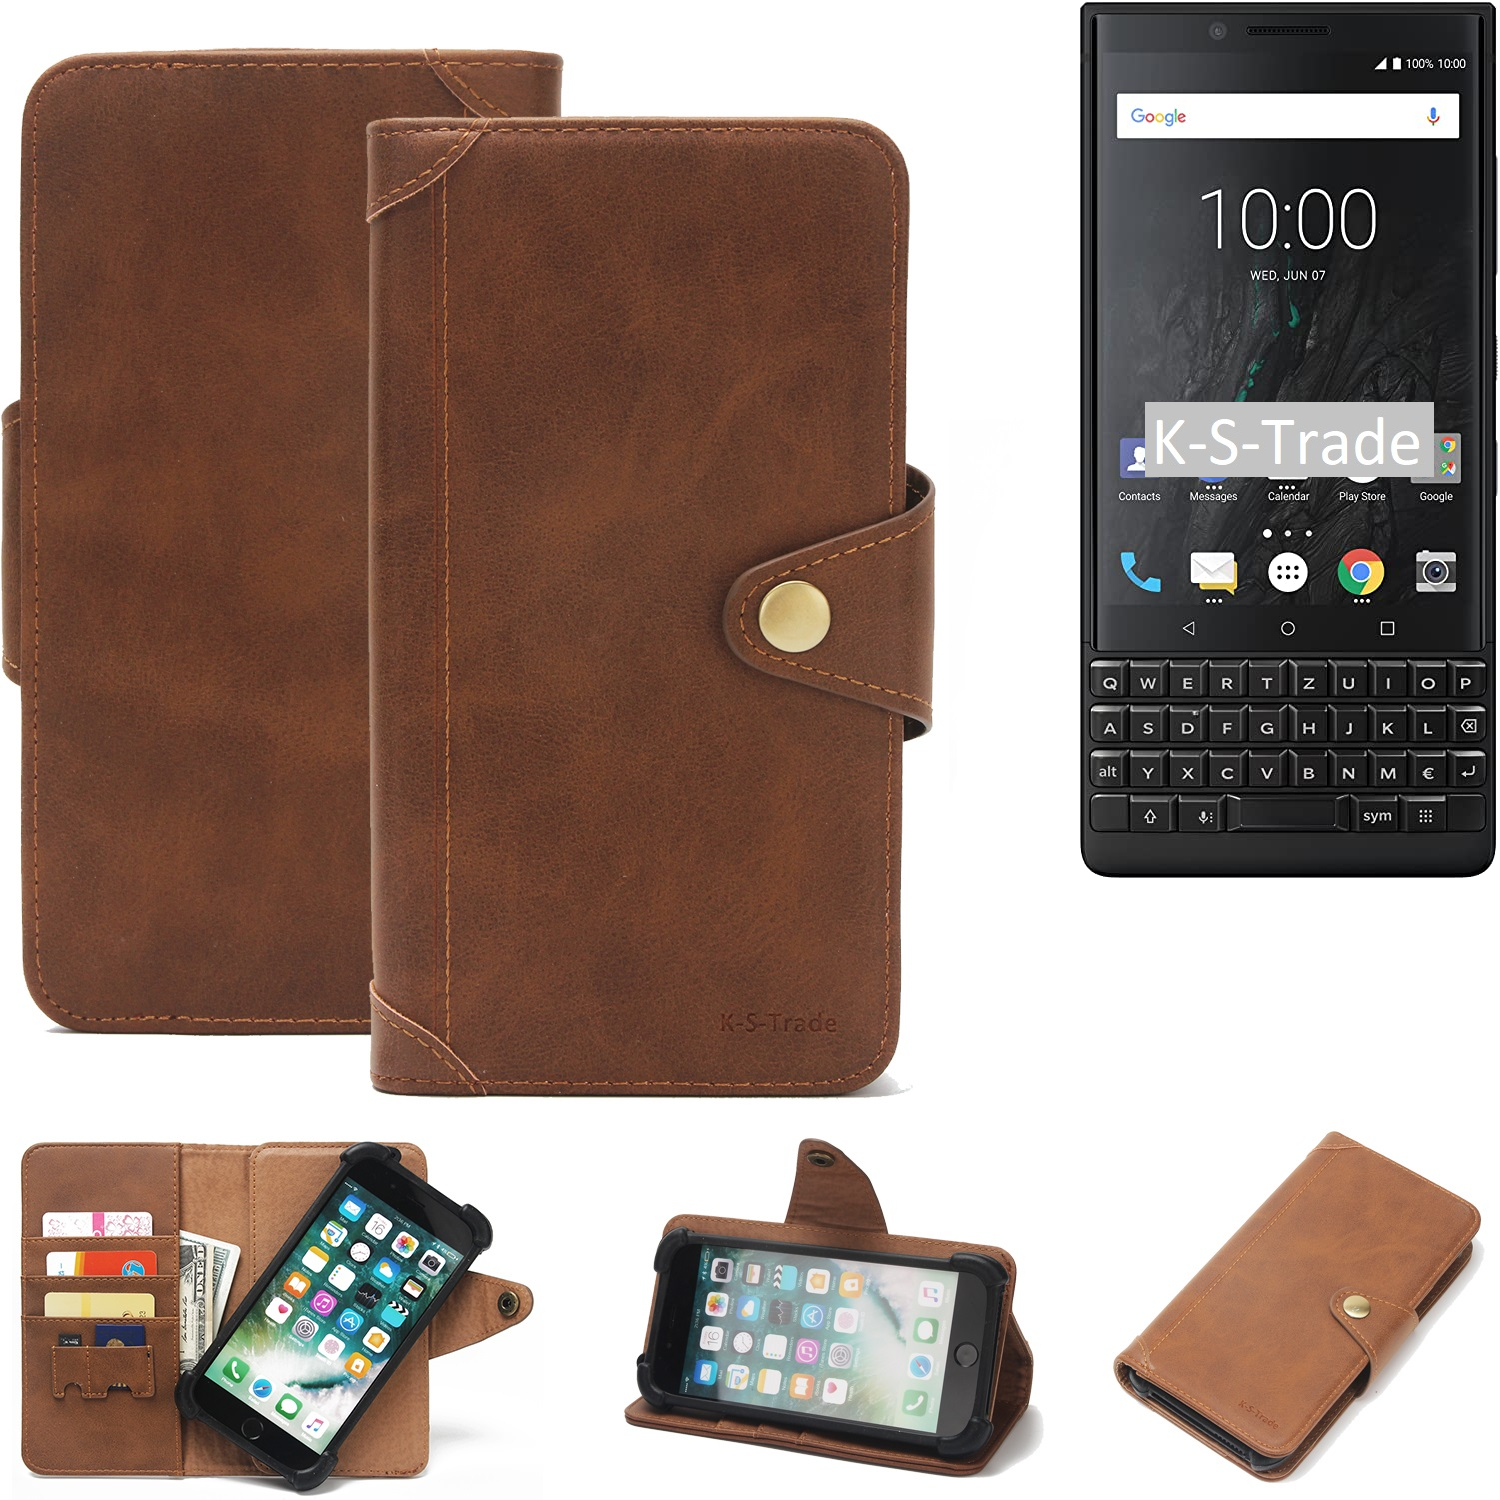 KEY2 Blackberry, Bookcover, Schutzhülle, (Dual-SIM), braun K-S-TRADE